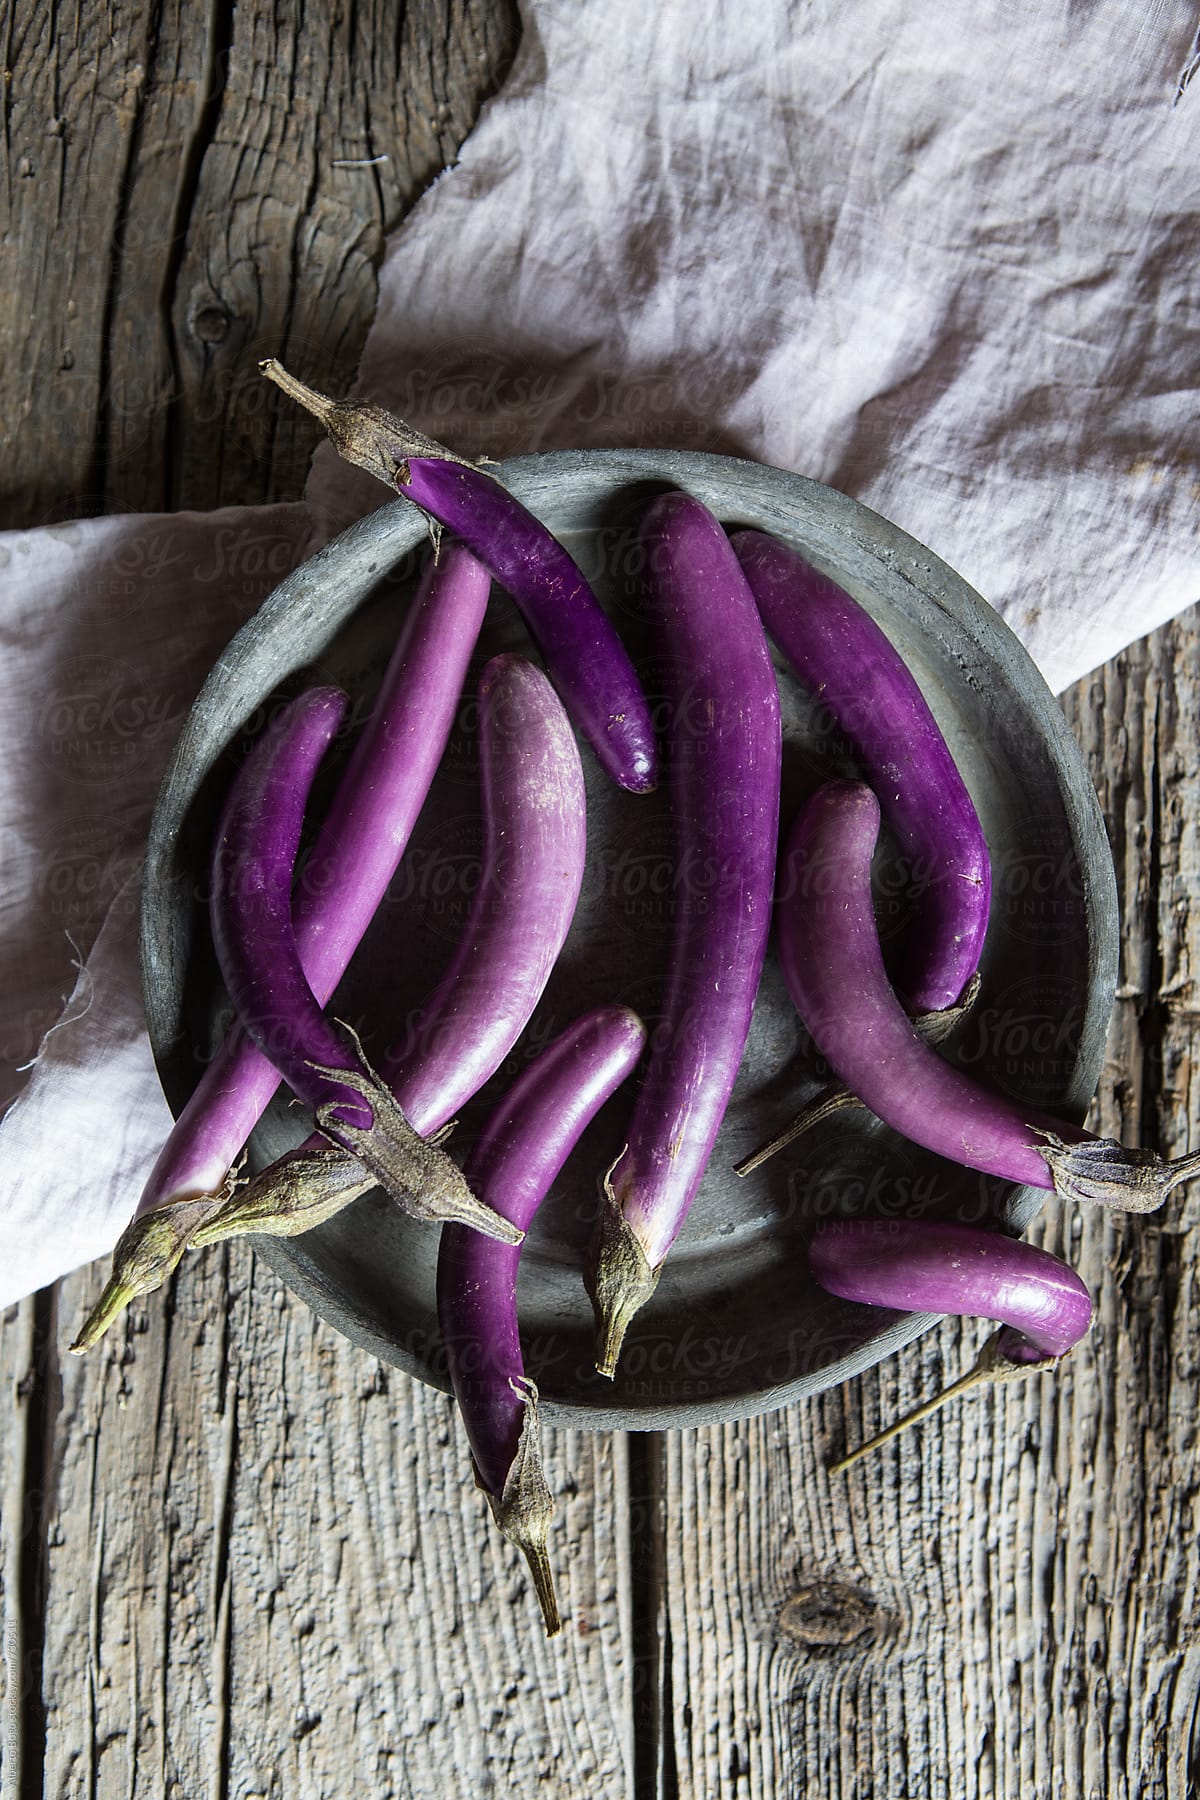 Fresh purple eggplants inside tray on wooden table